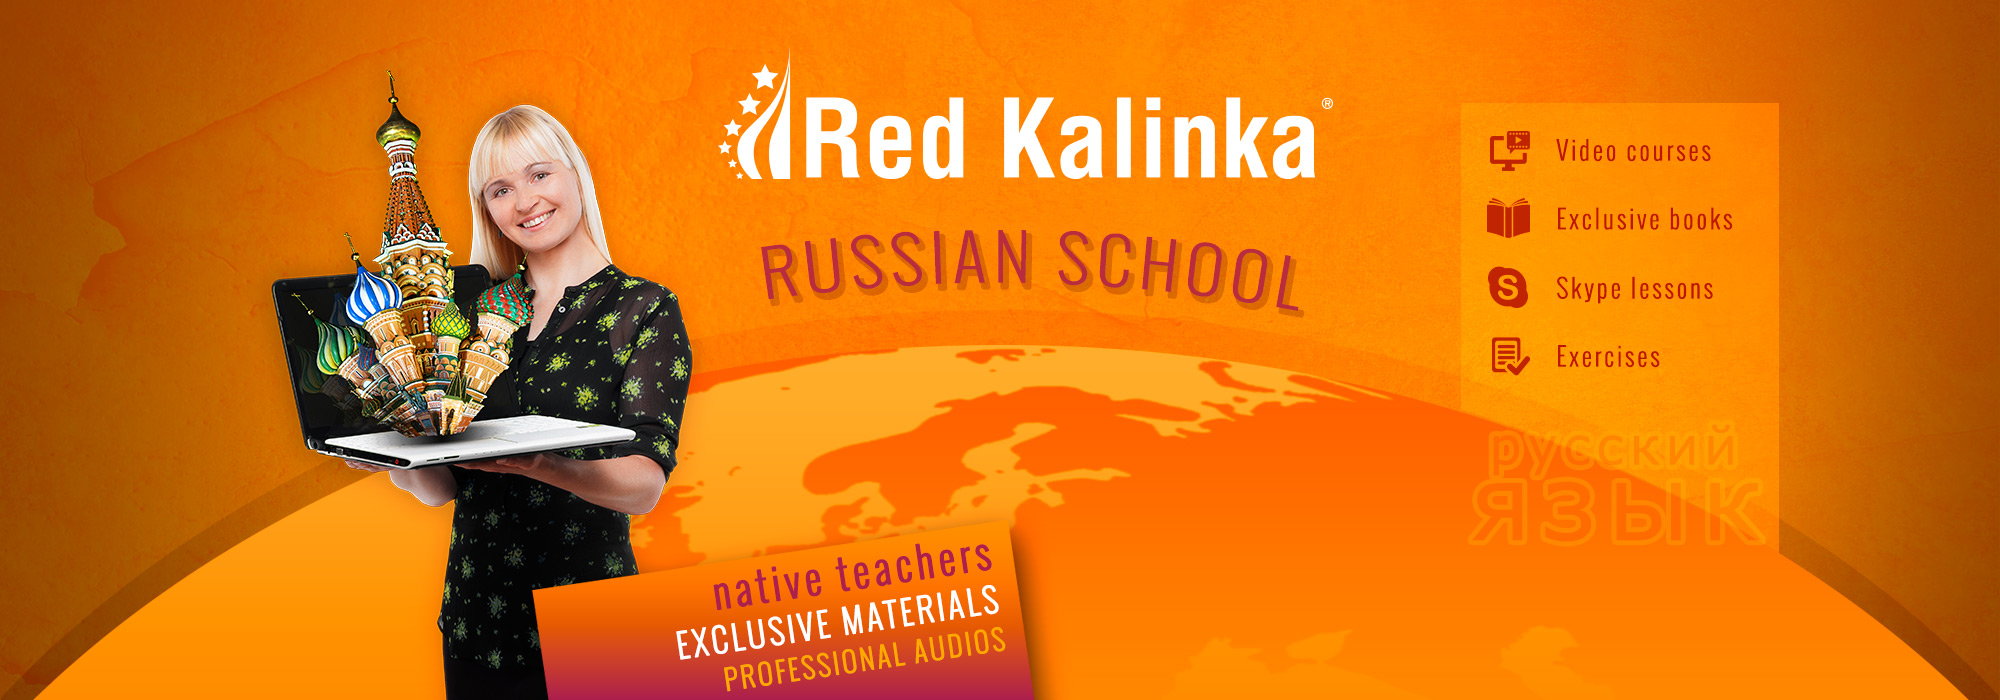 Red Kalinka: Russian school